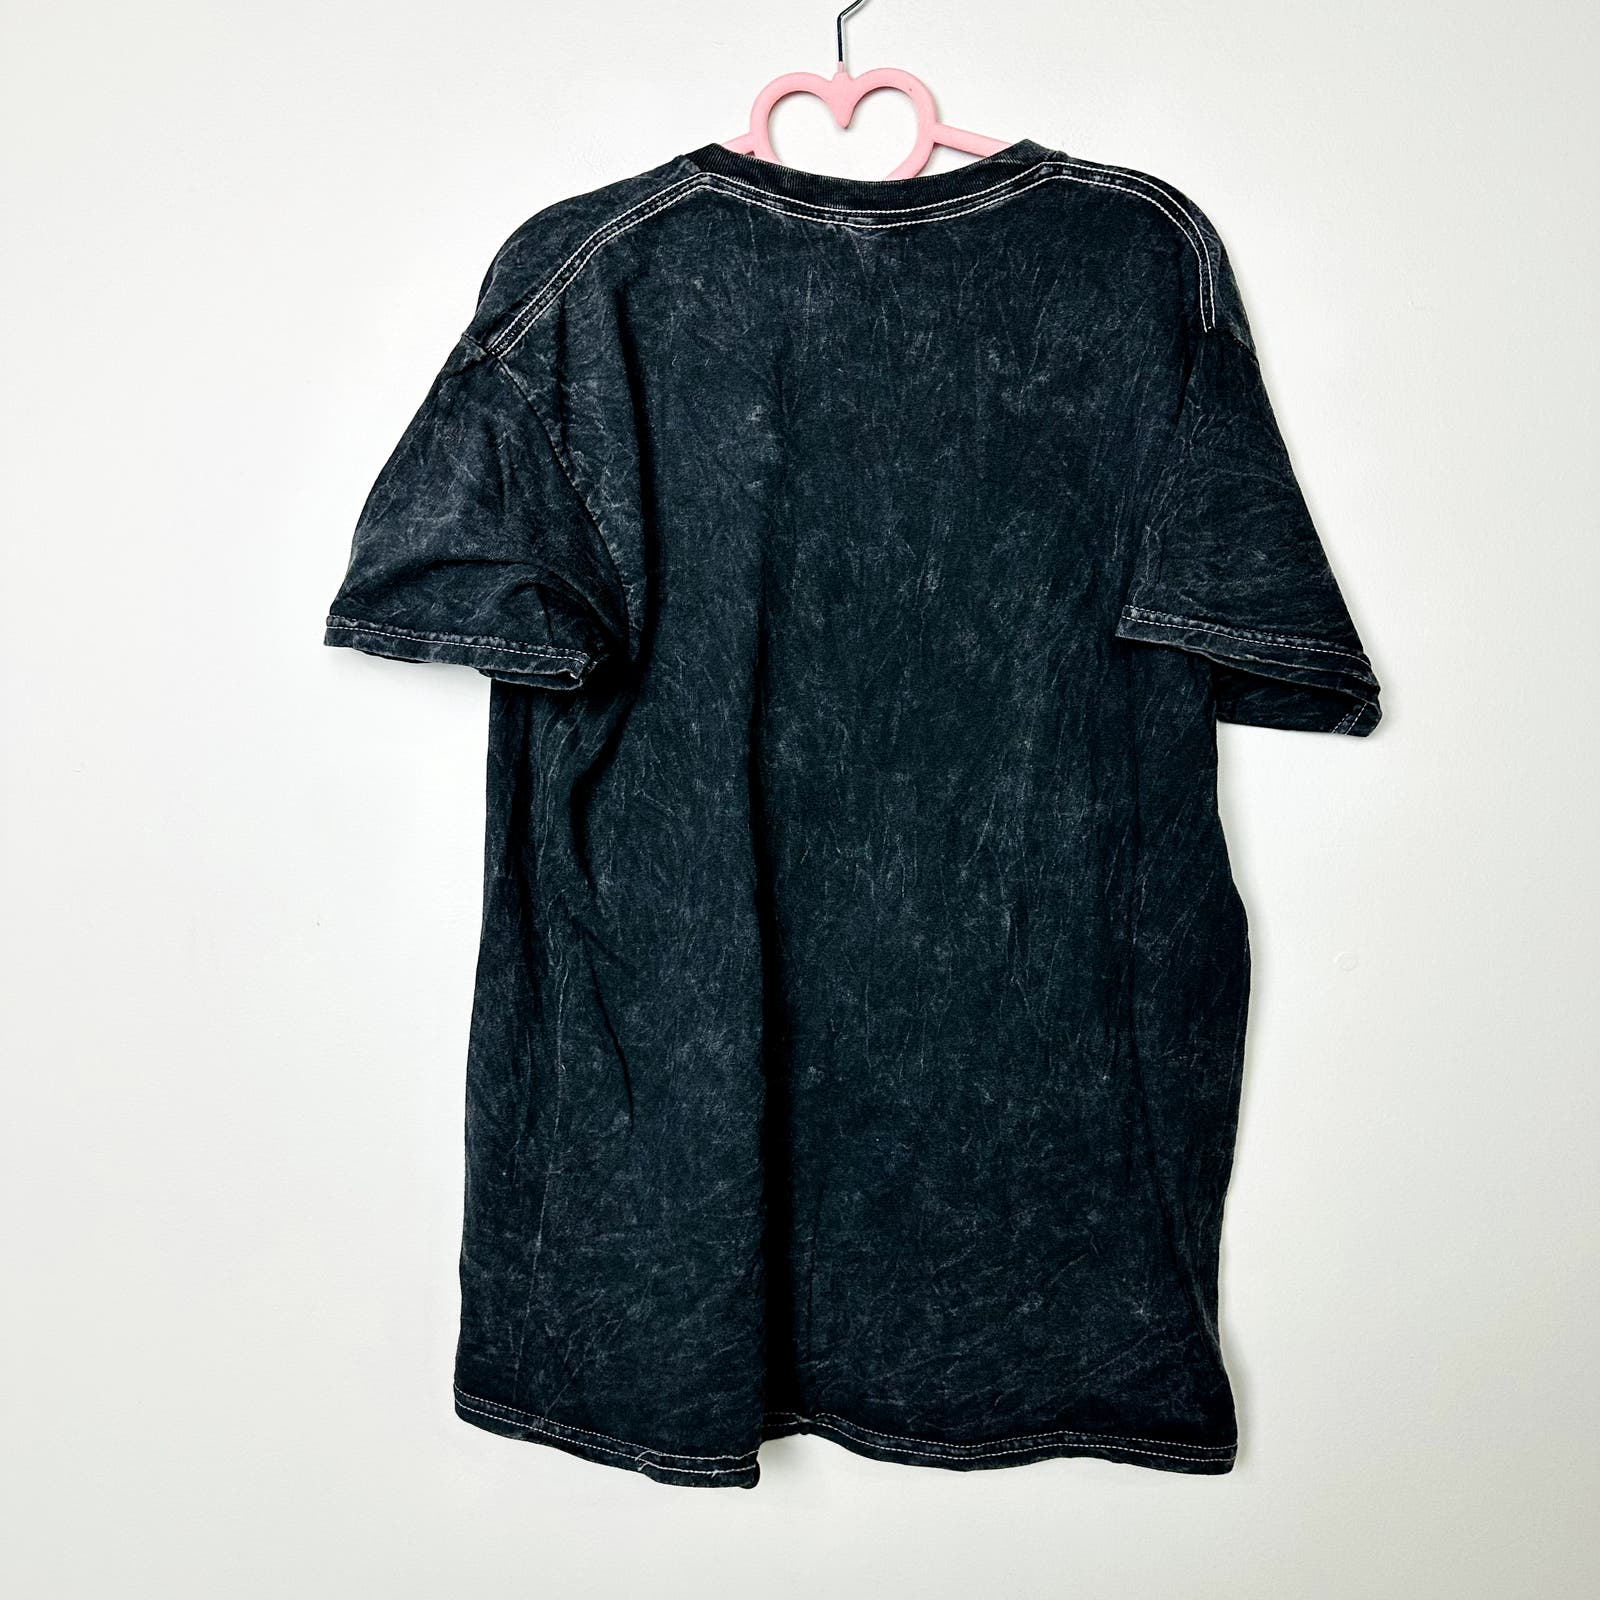 Sublime NWOT Graphic Short Sleeve Band T-Shirt Top Black Acid Wash Size Large